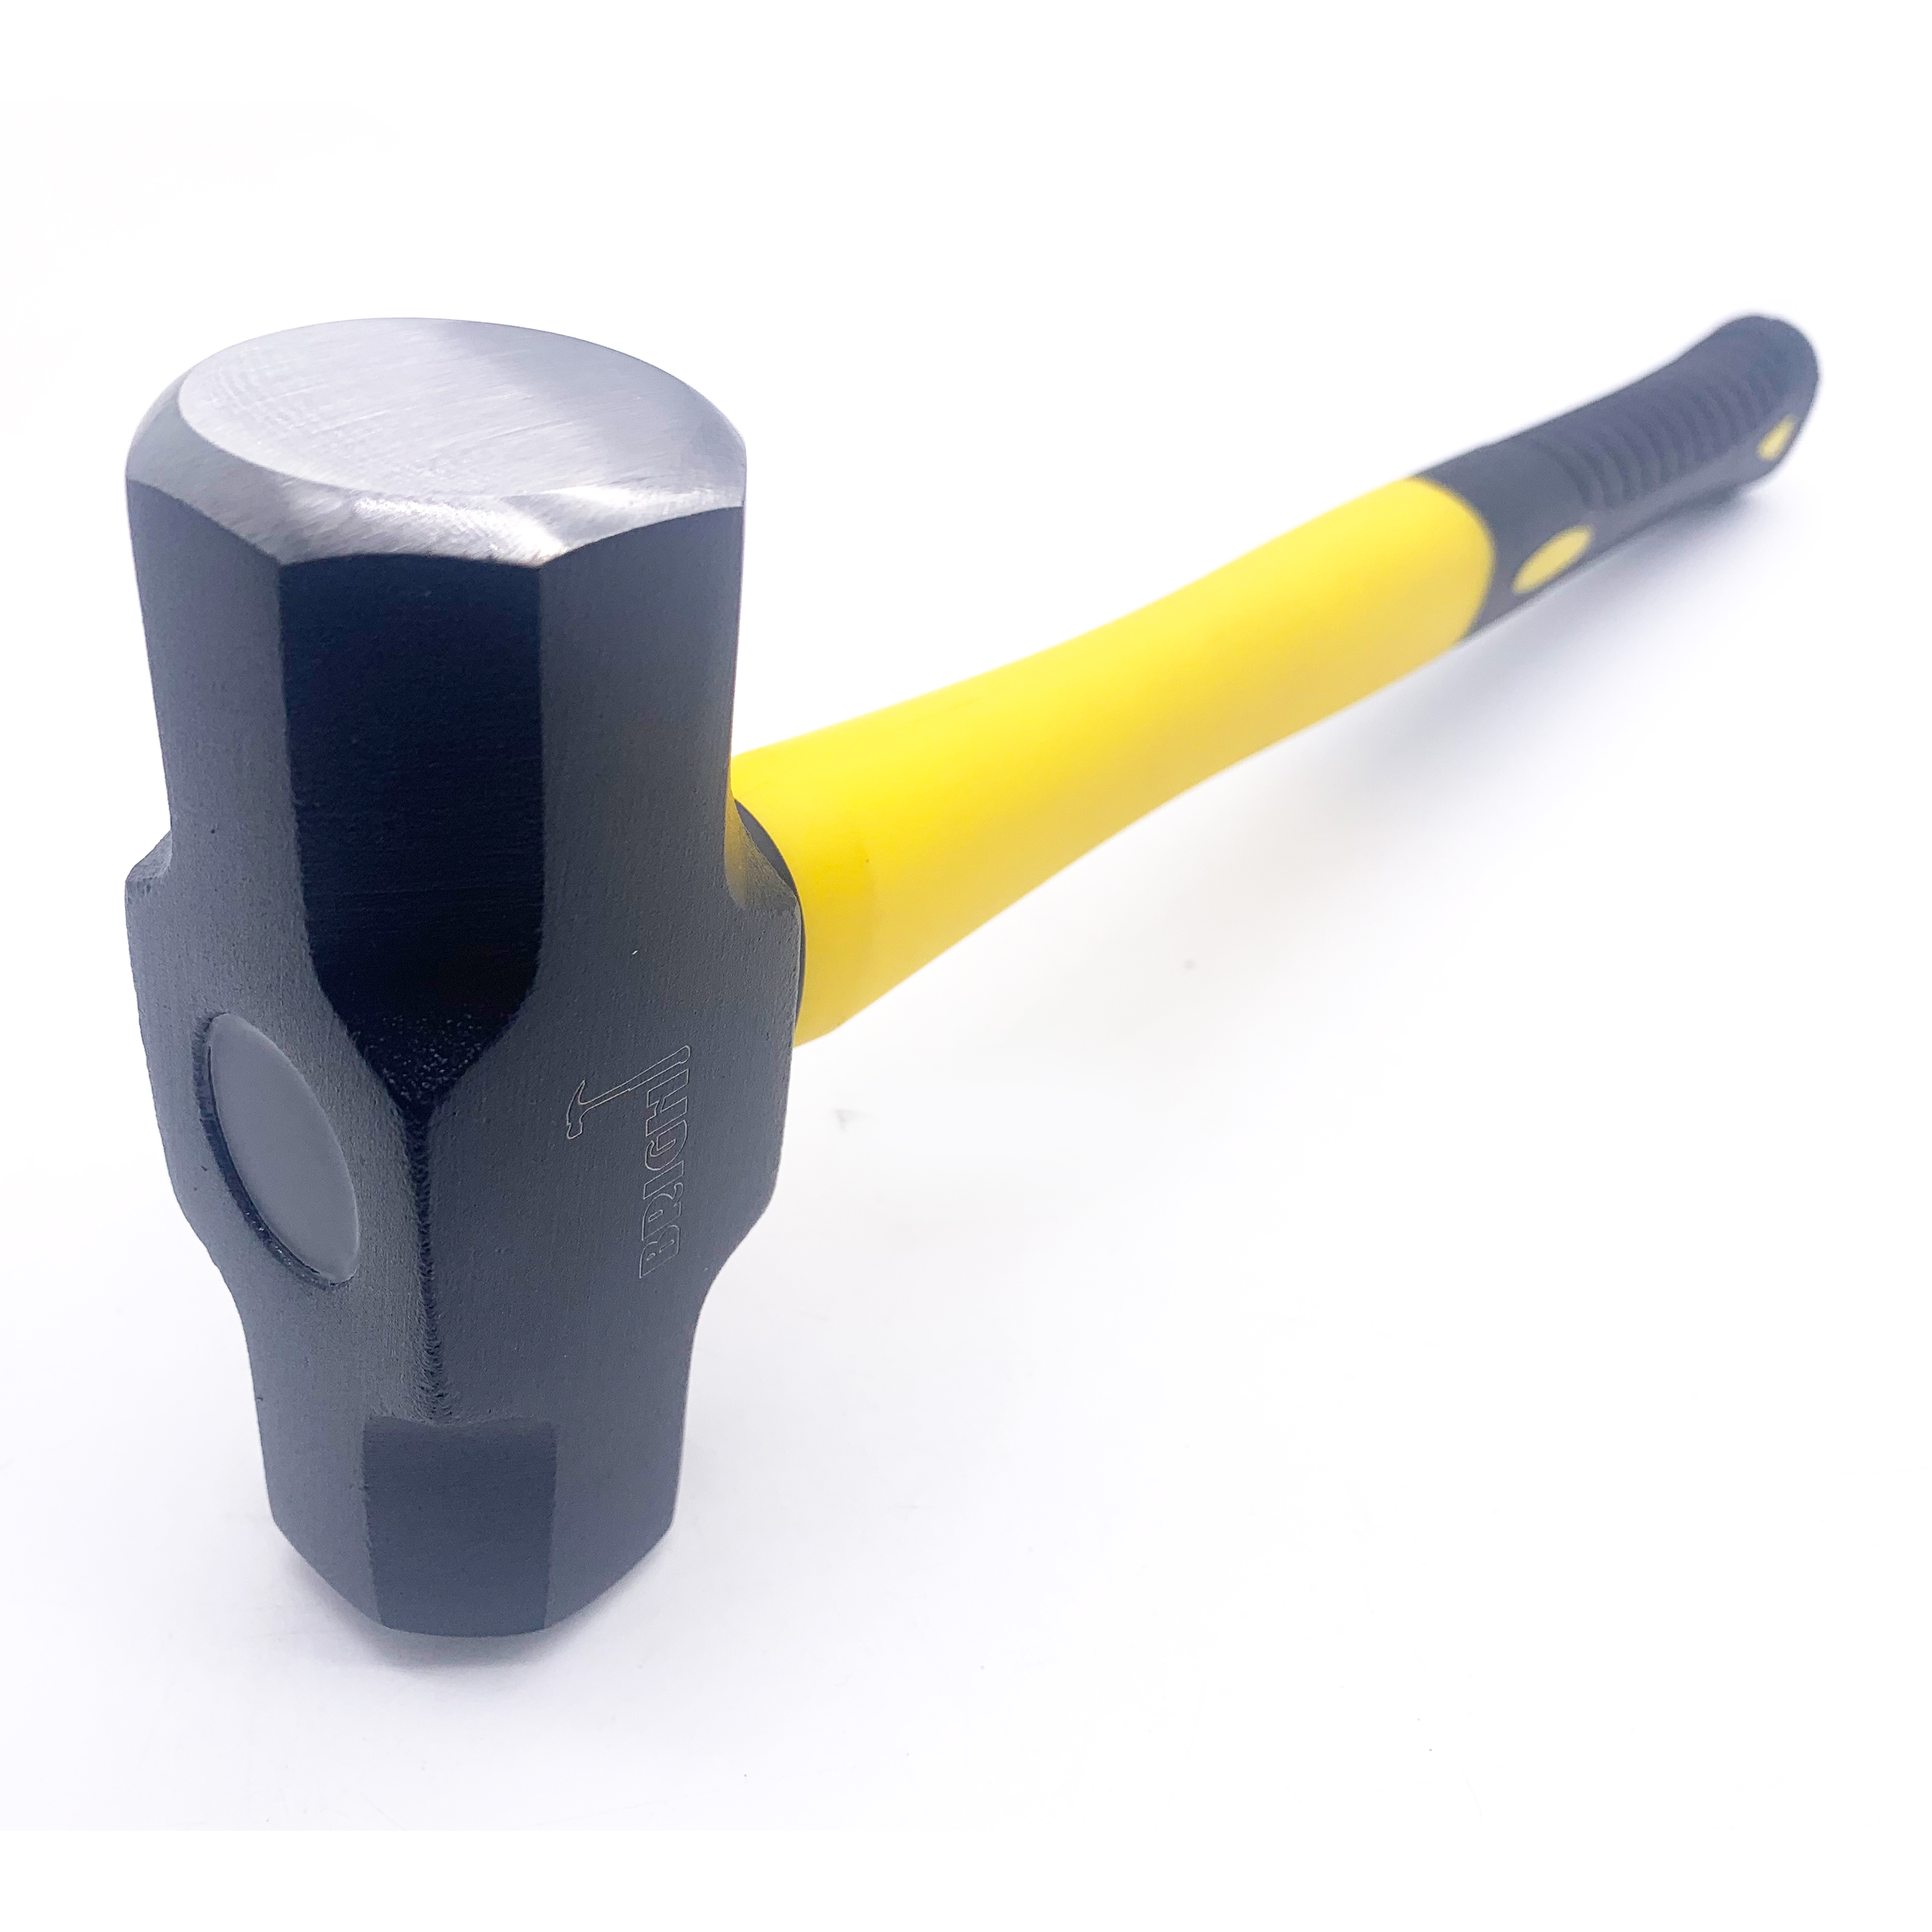 sledge hammer with fiberglass handle